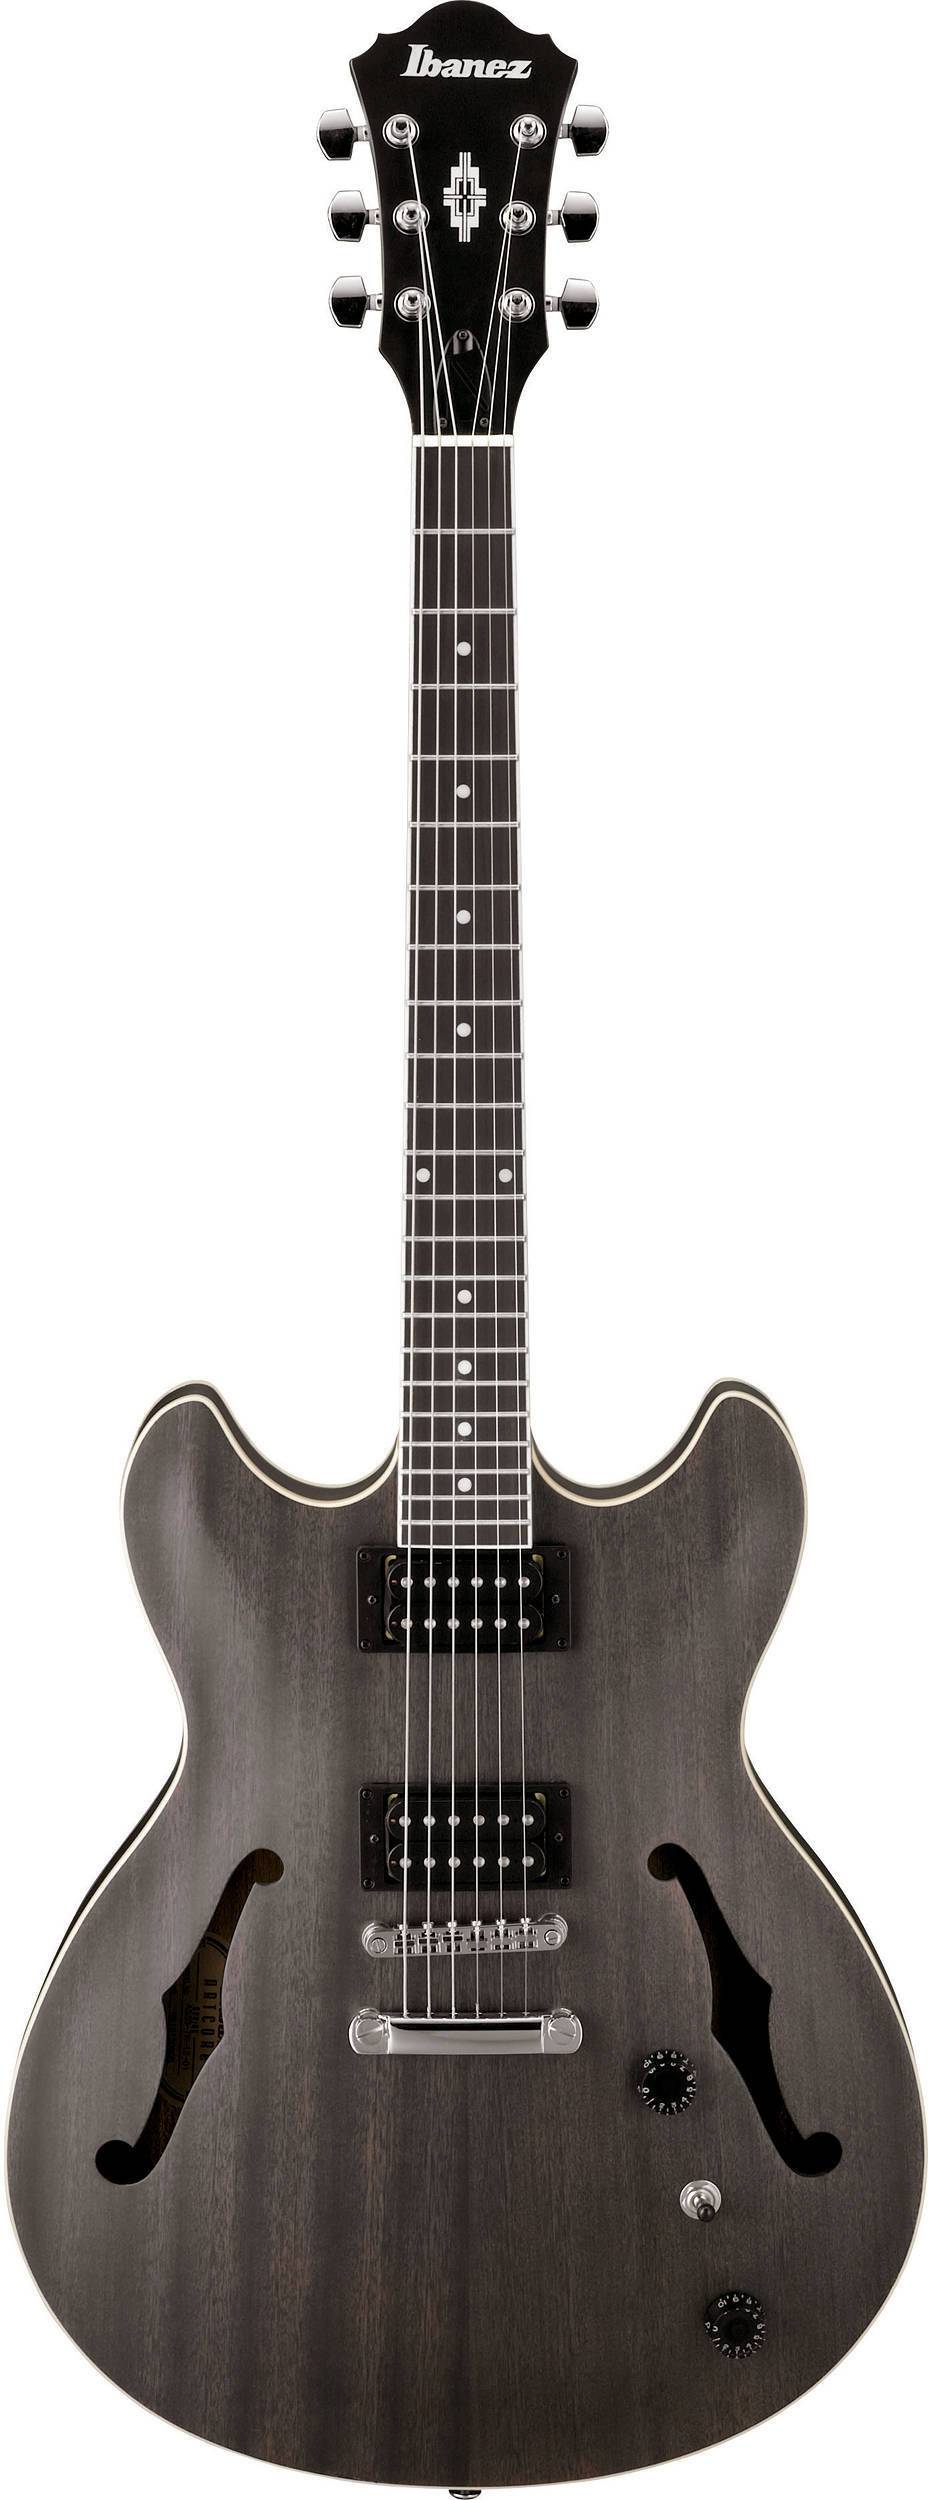 Ibanez AS53 Artcore Semi-Hollow Electric Guitar (Flat Transparent Black)